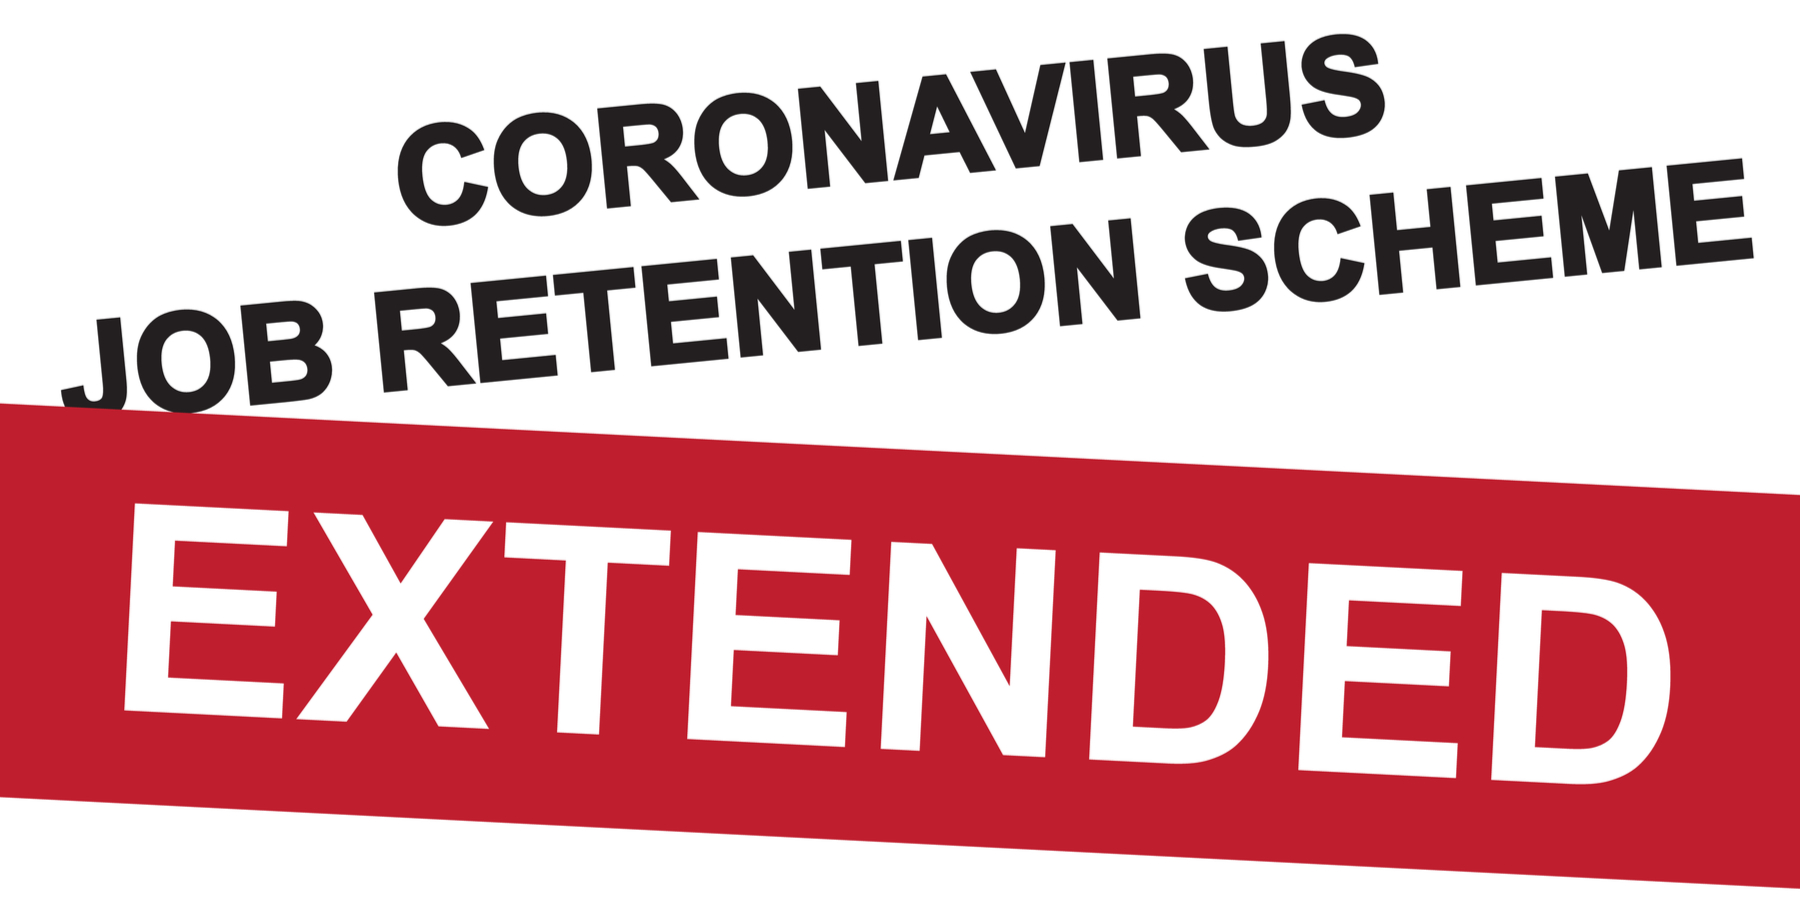 Coronavirus Job Retention Scheme Extension